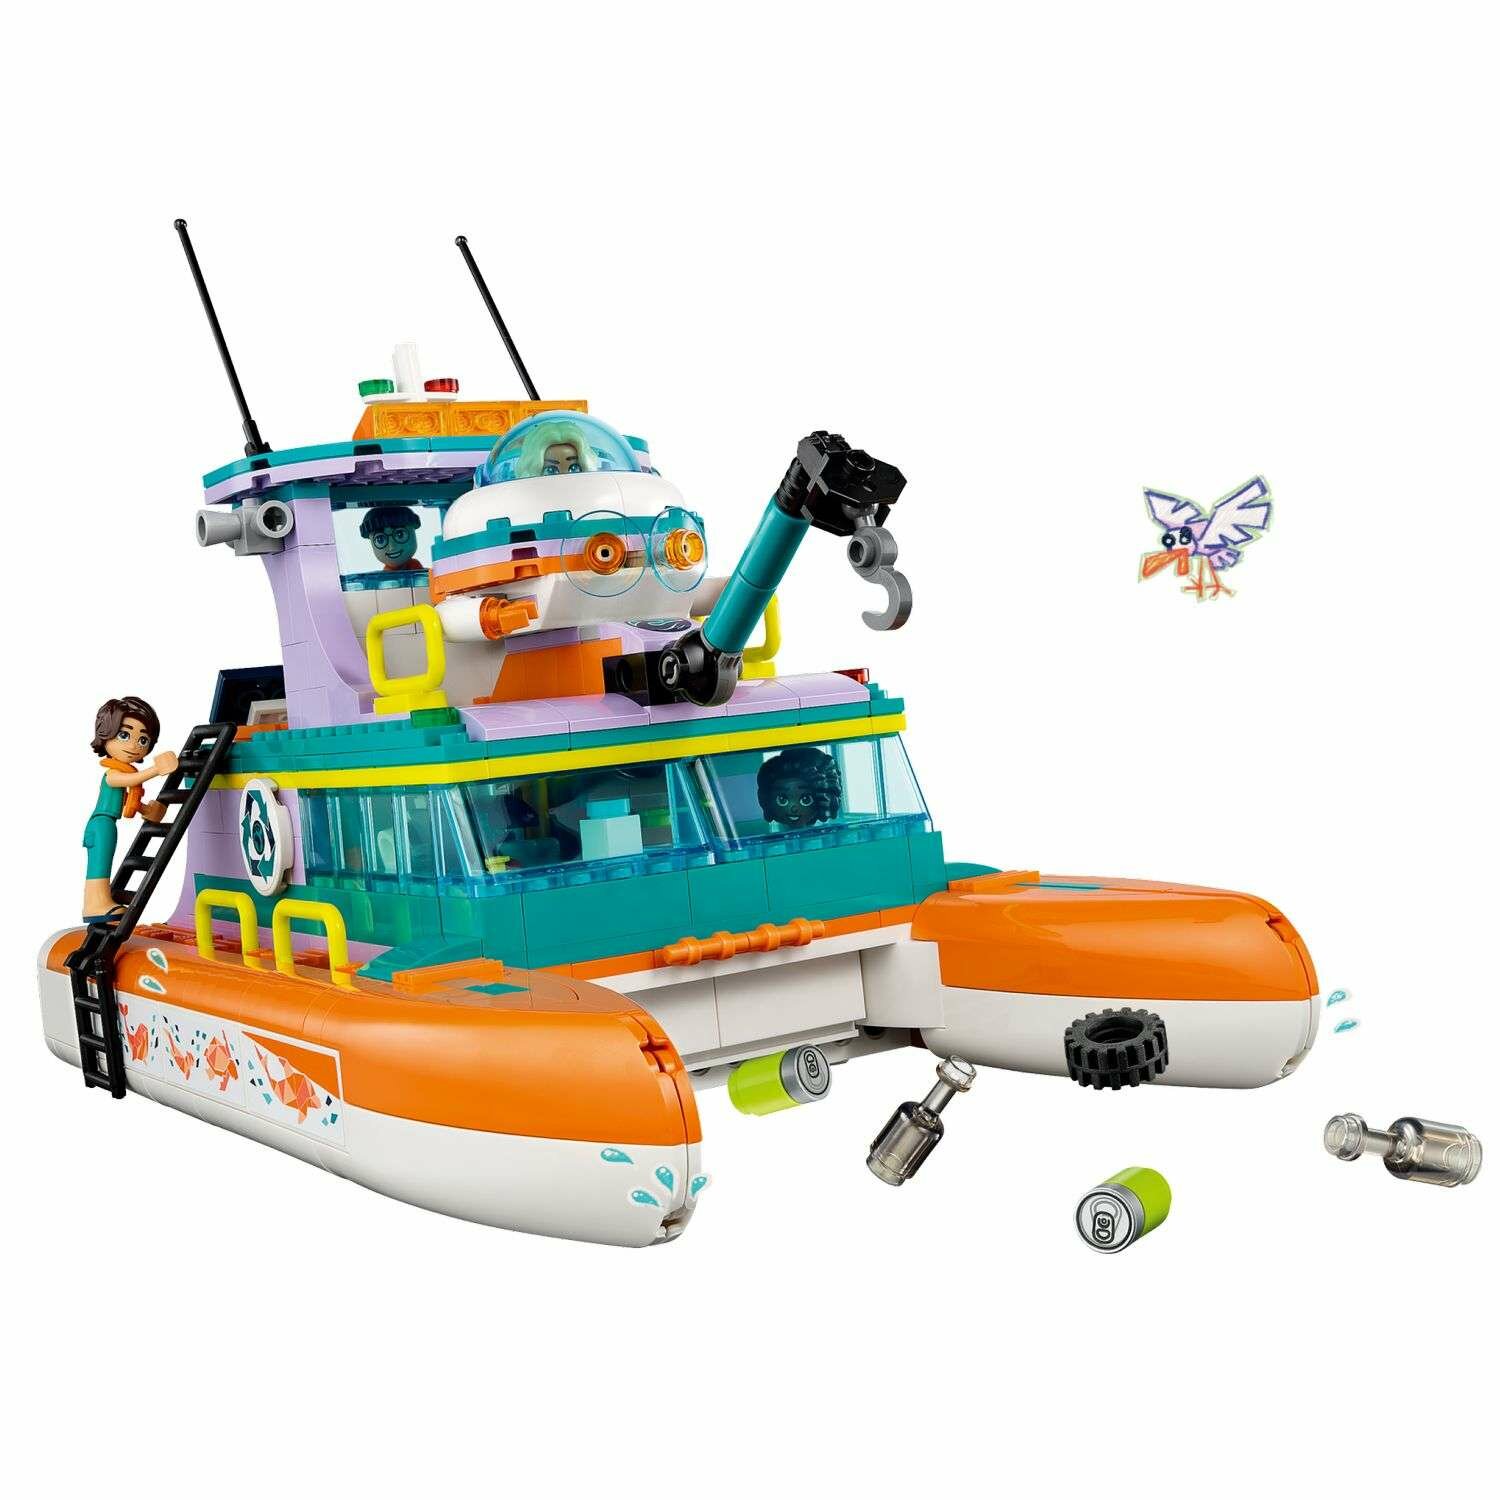 LEGO Friends Sea Rescue Boat - фотография № 20